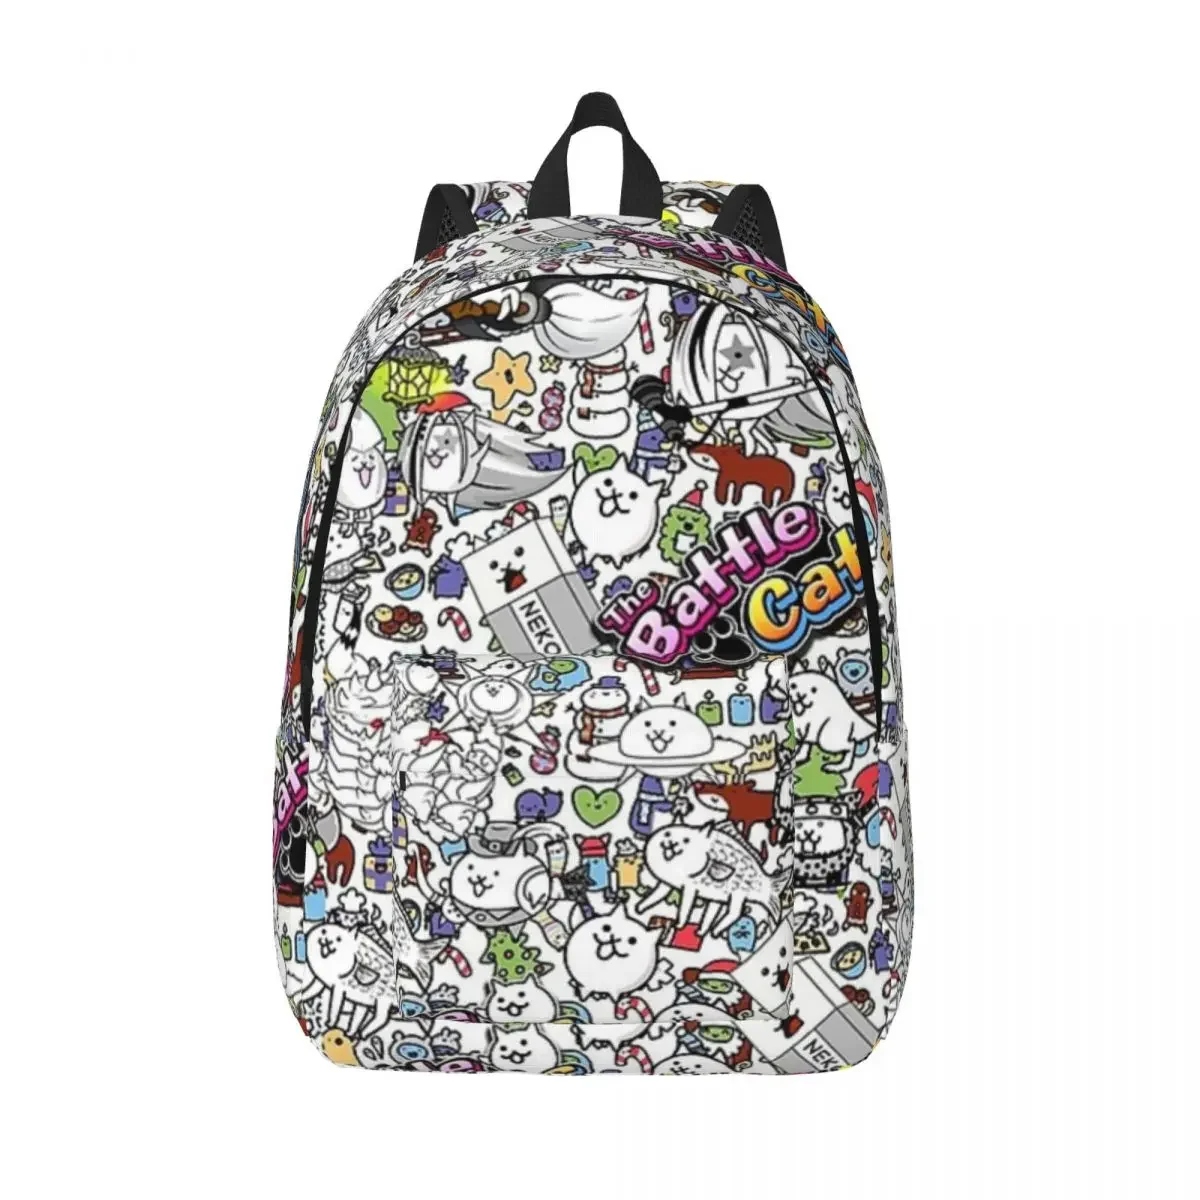 

Battle Cats Woman Small Backpacks Boys Girls Bookbag Fashion Shoulder Bag Portability Travel Rucksack Students School Bags